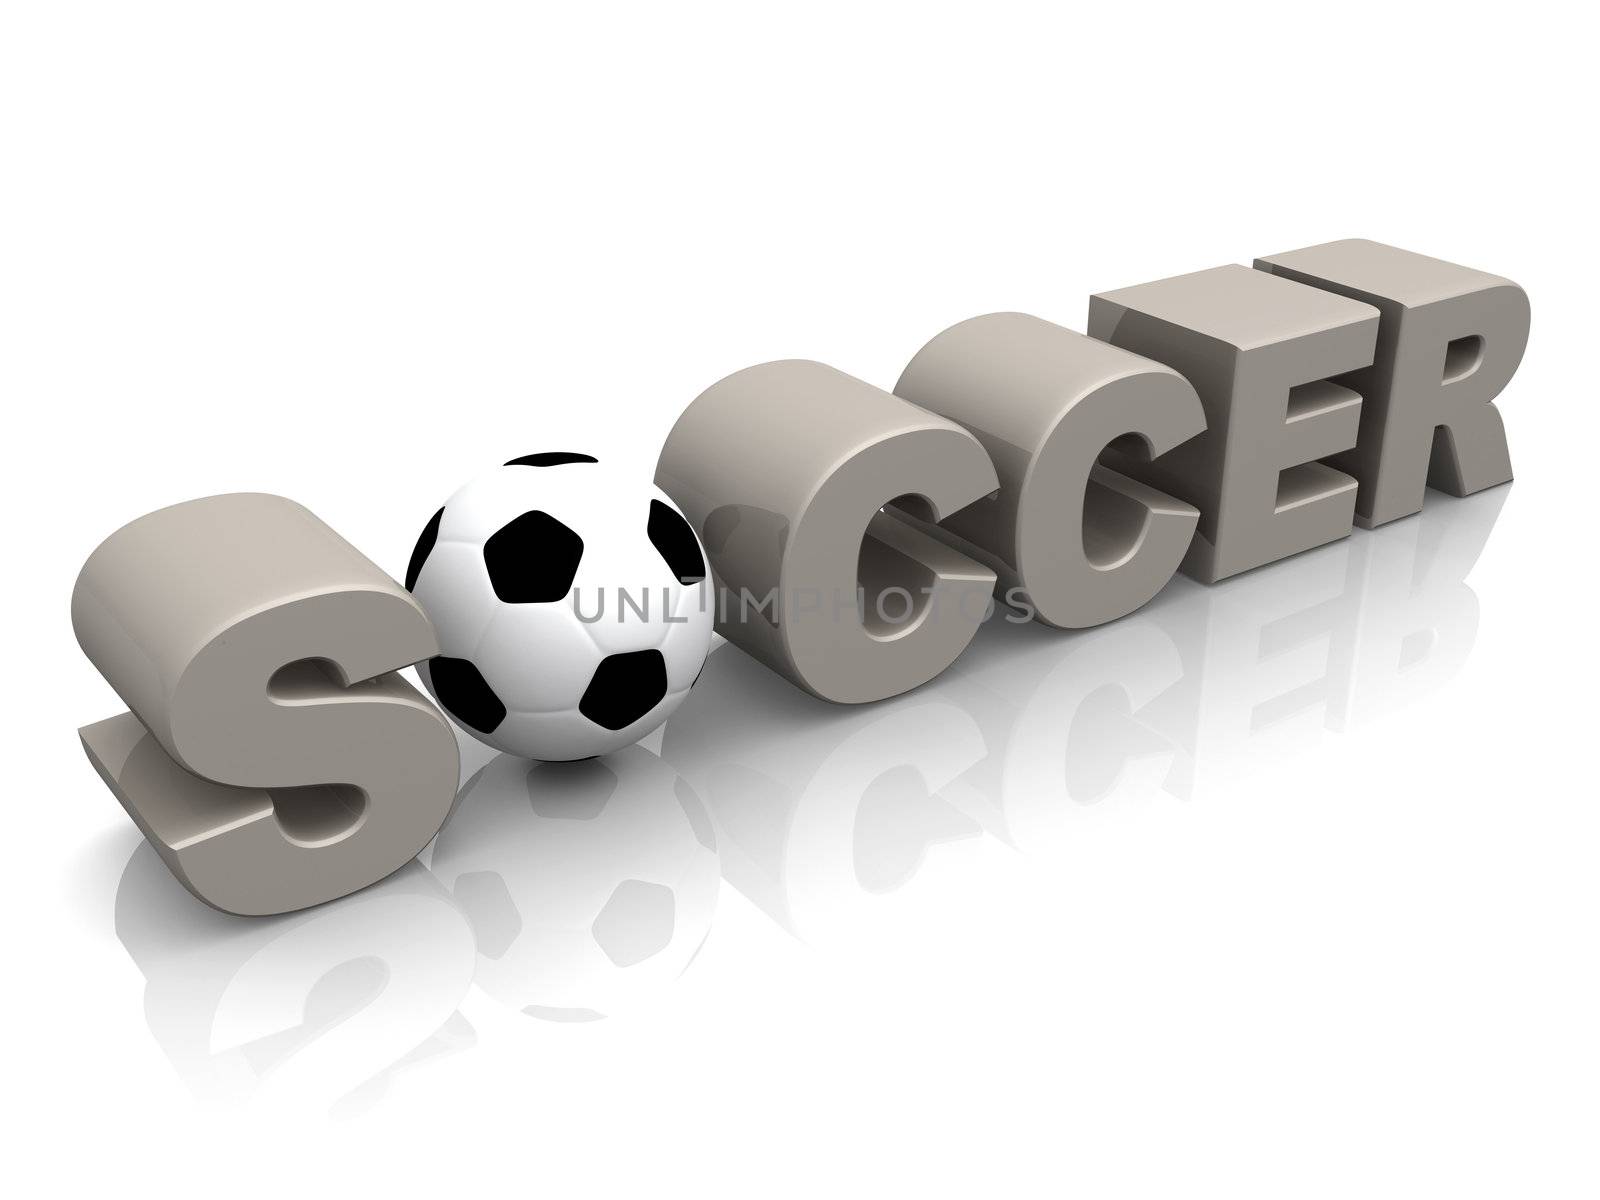 Soccer by 3pod